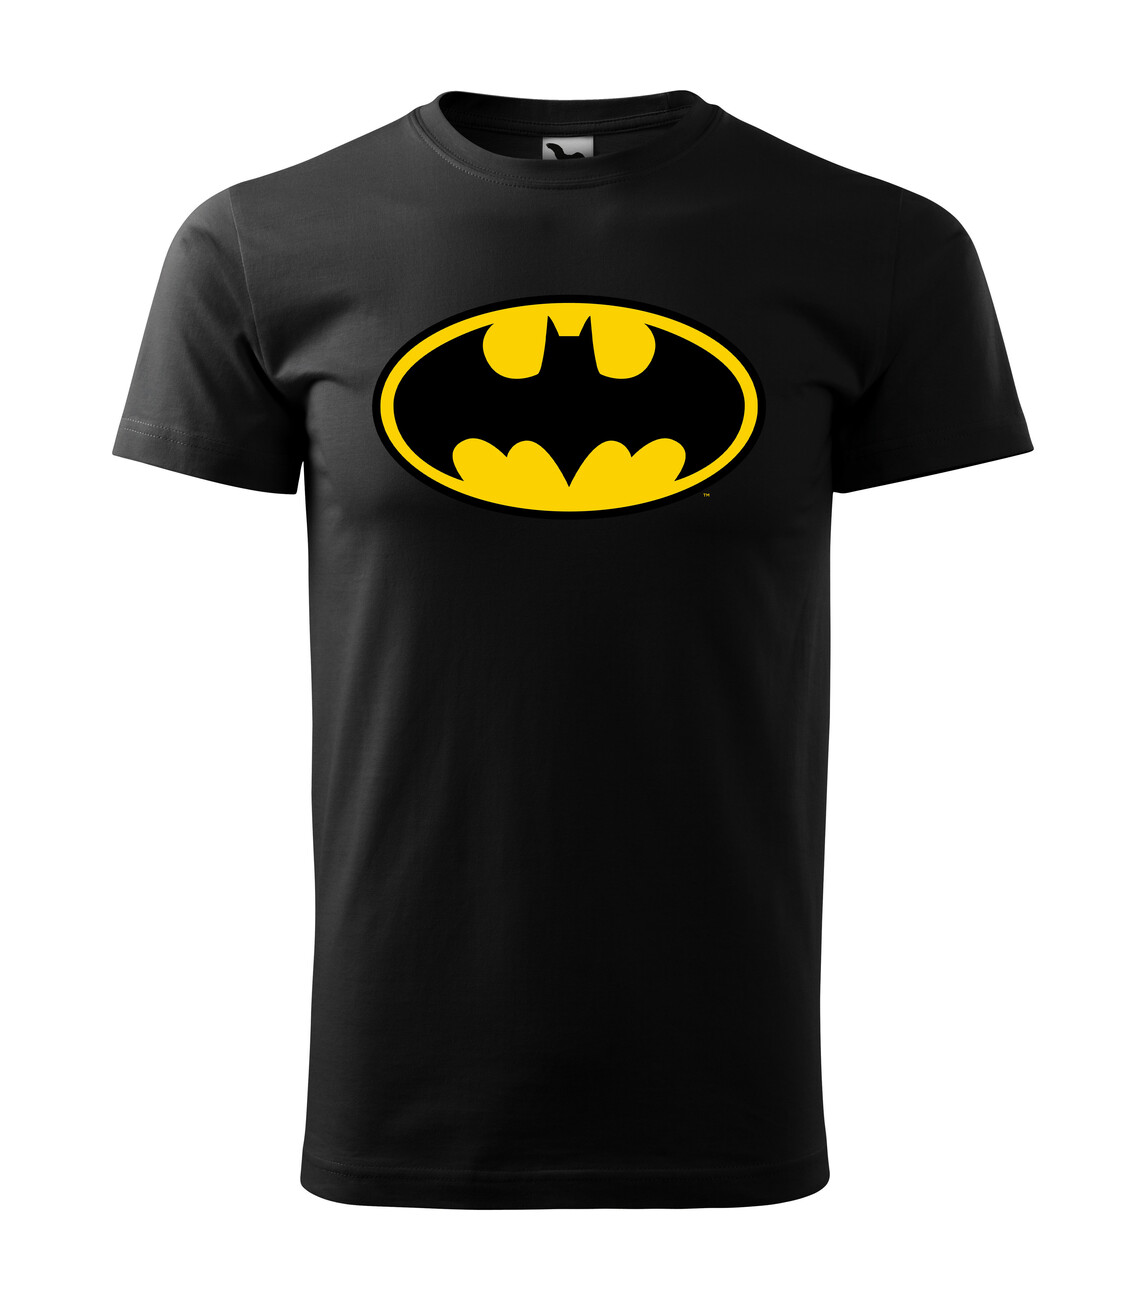 accessories | Logo fans - Clothes and merchandise Batman for